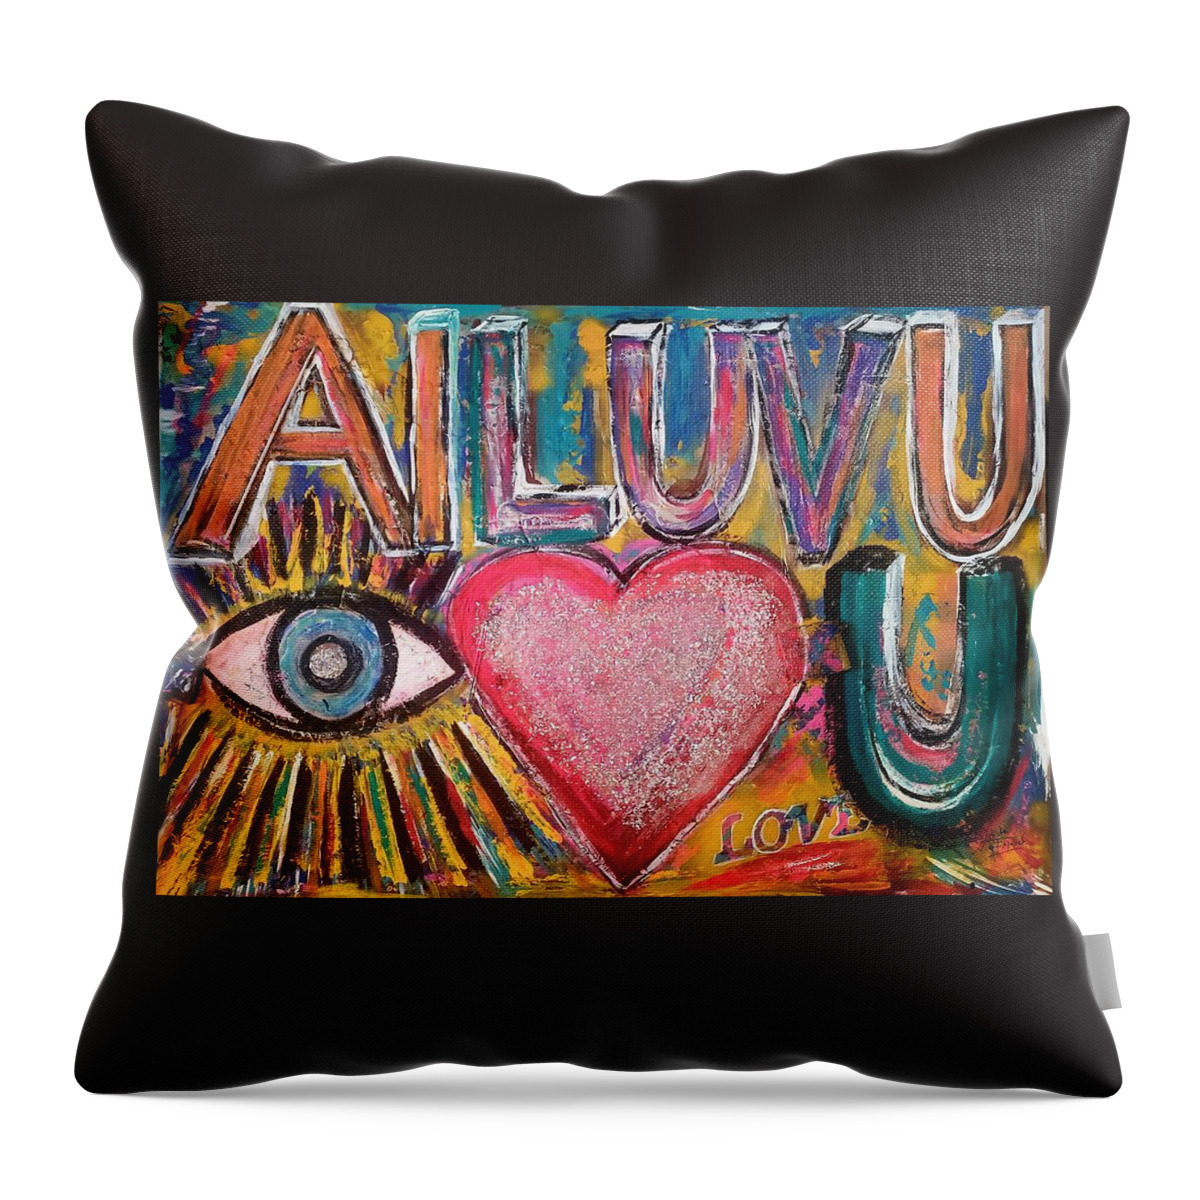 Love Throw Pillow featuring the mixed media Ailuvu by Artista Elisabet